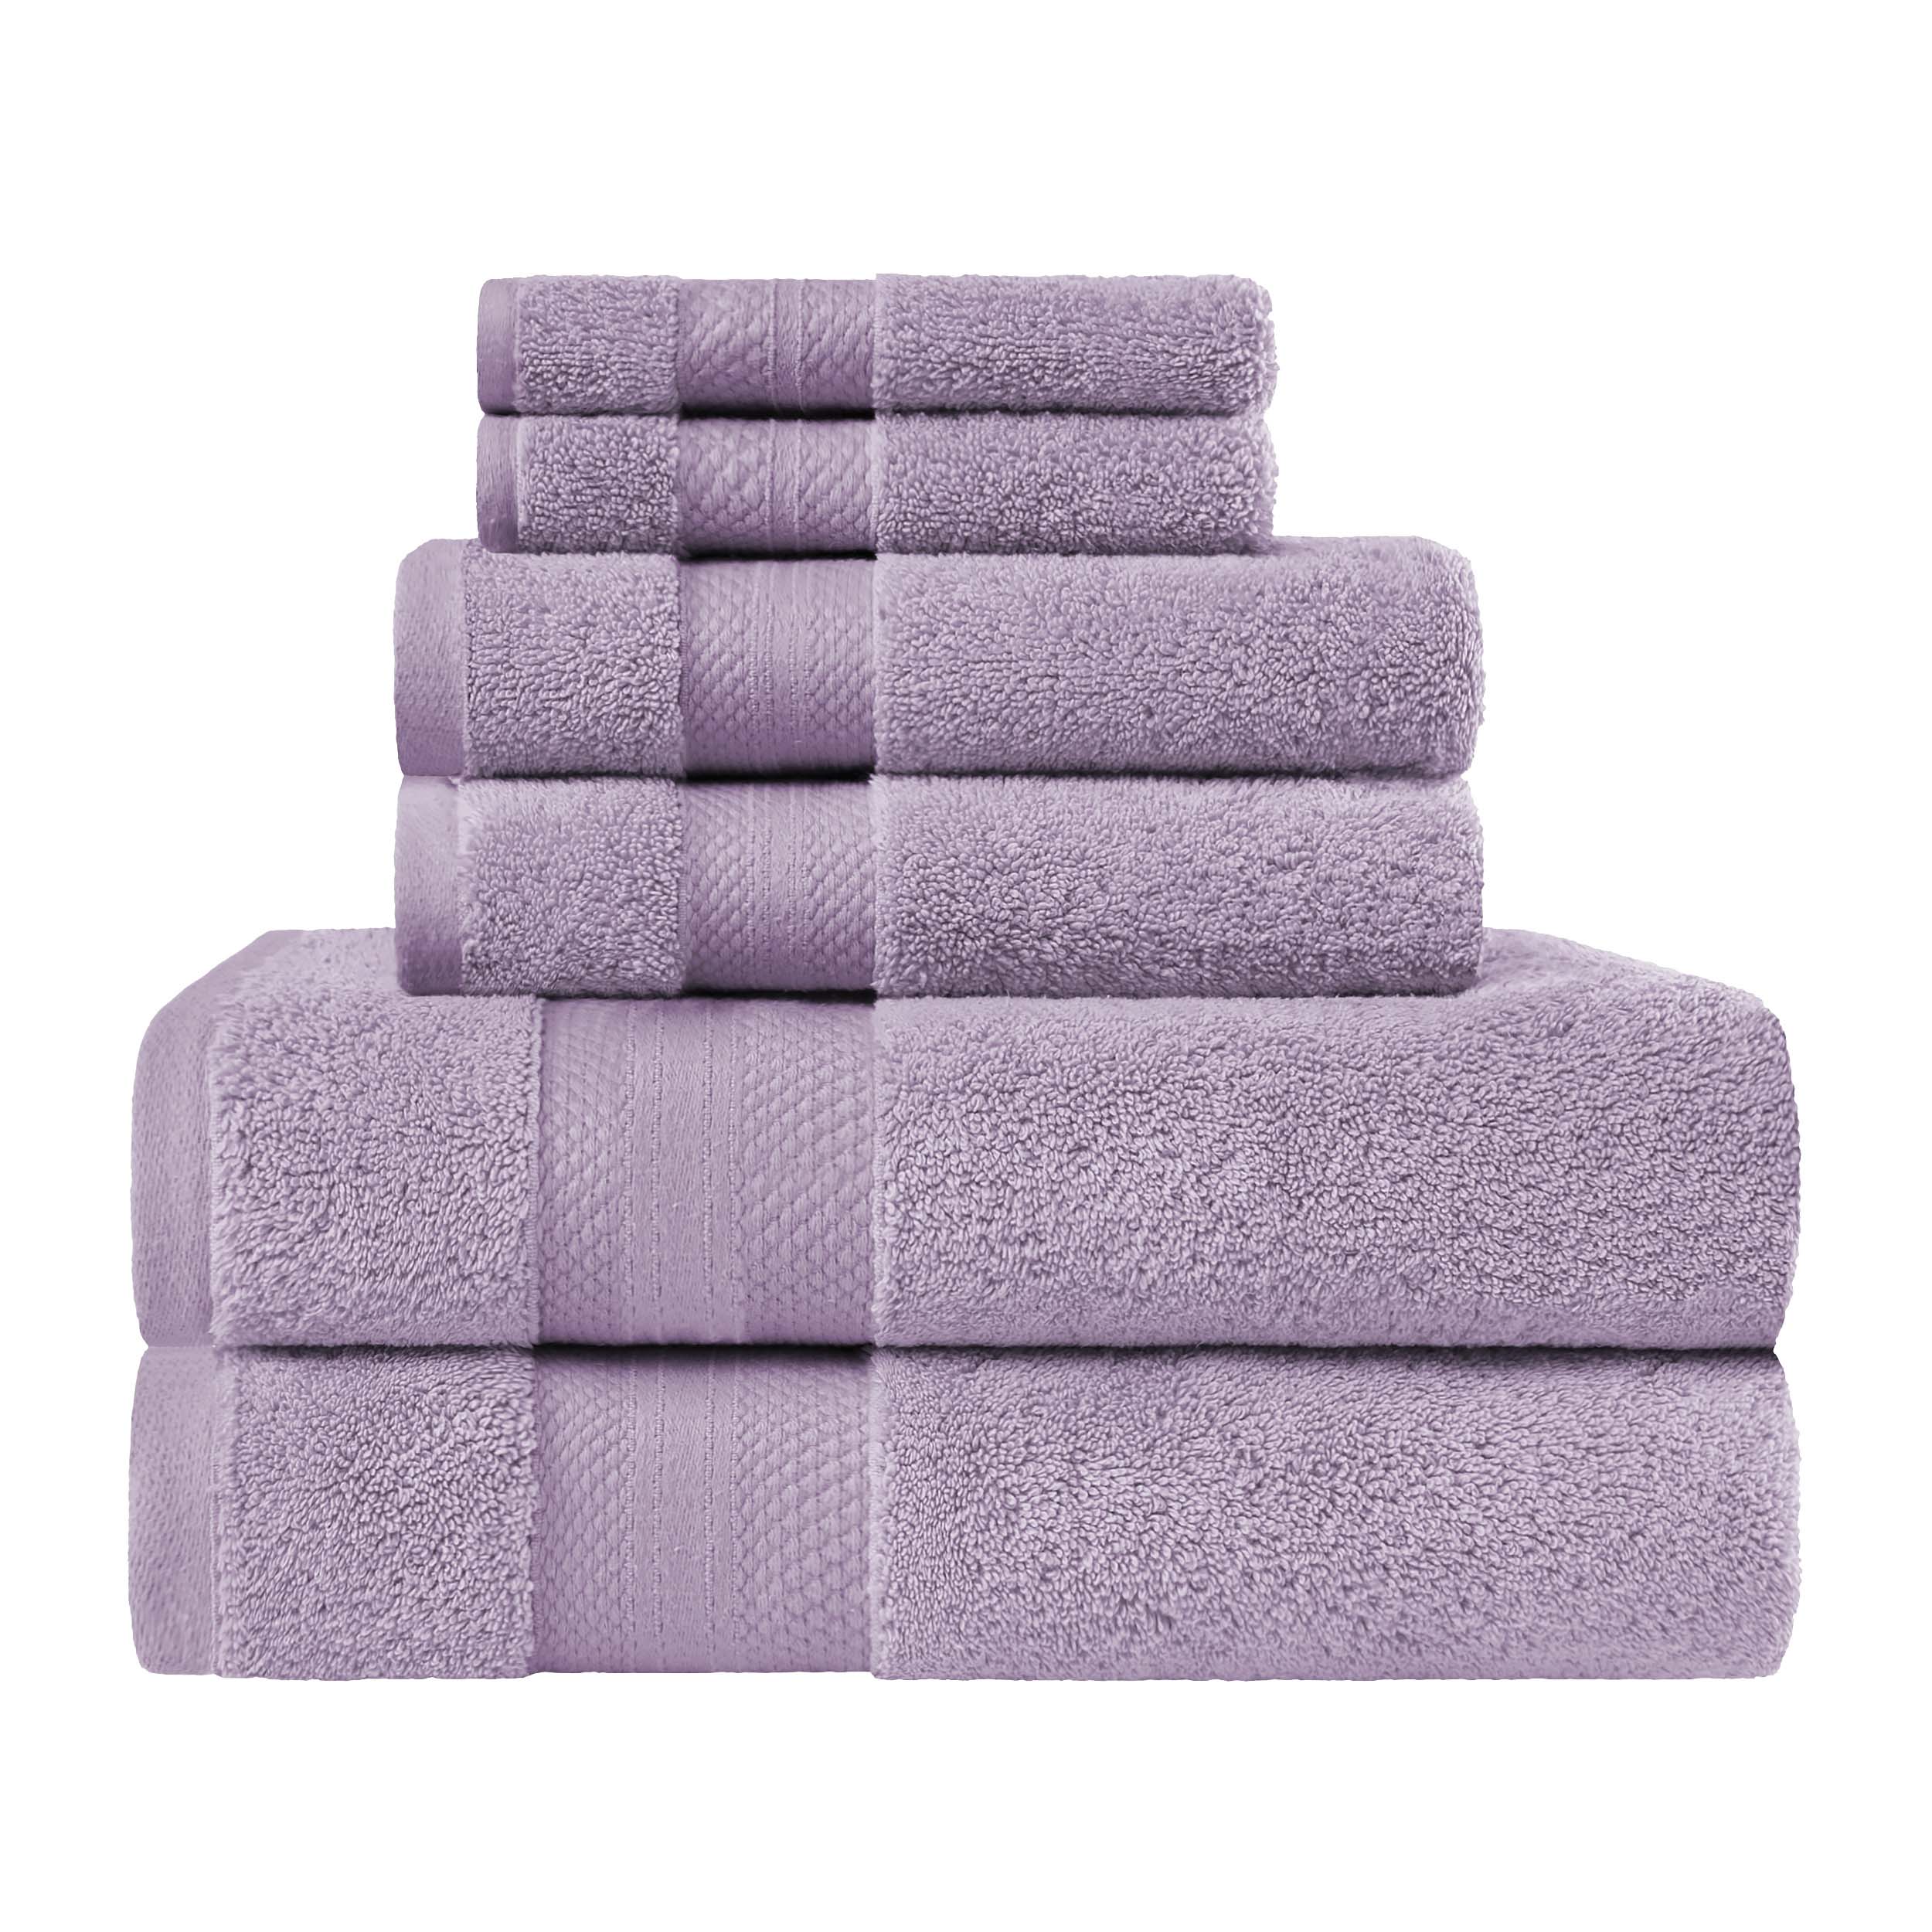 Blue Nile Mills 6 Piece Turkish Cotton Luxury Solid Towel Set - Heavyweight Plush & Soft Face Towels Hand Towels Bath Towels